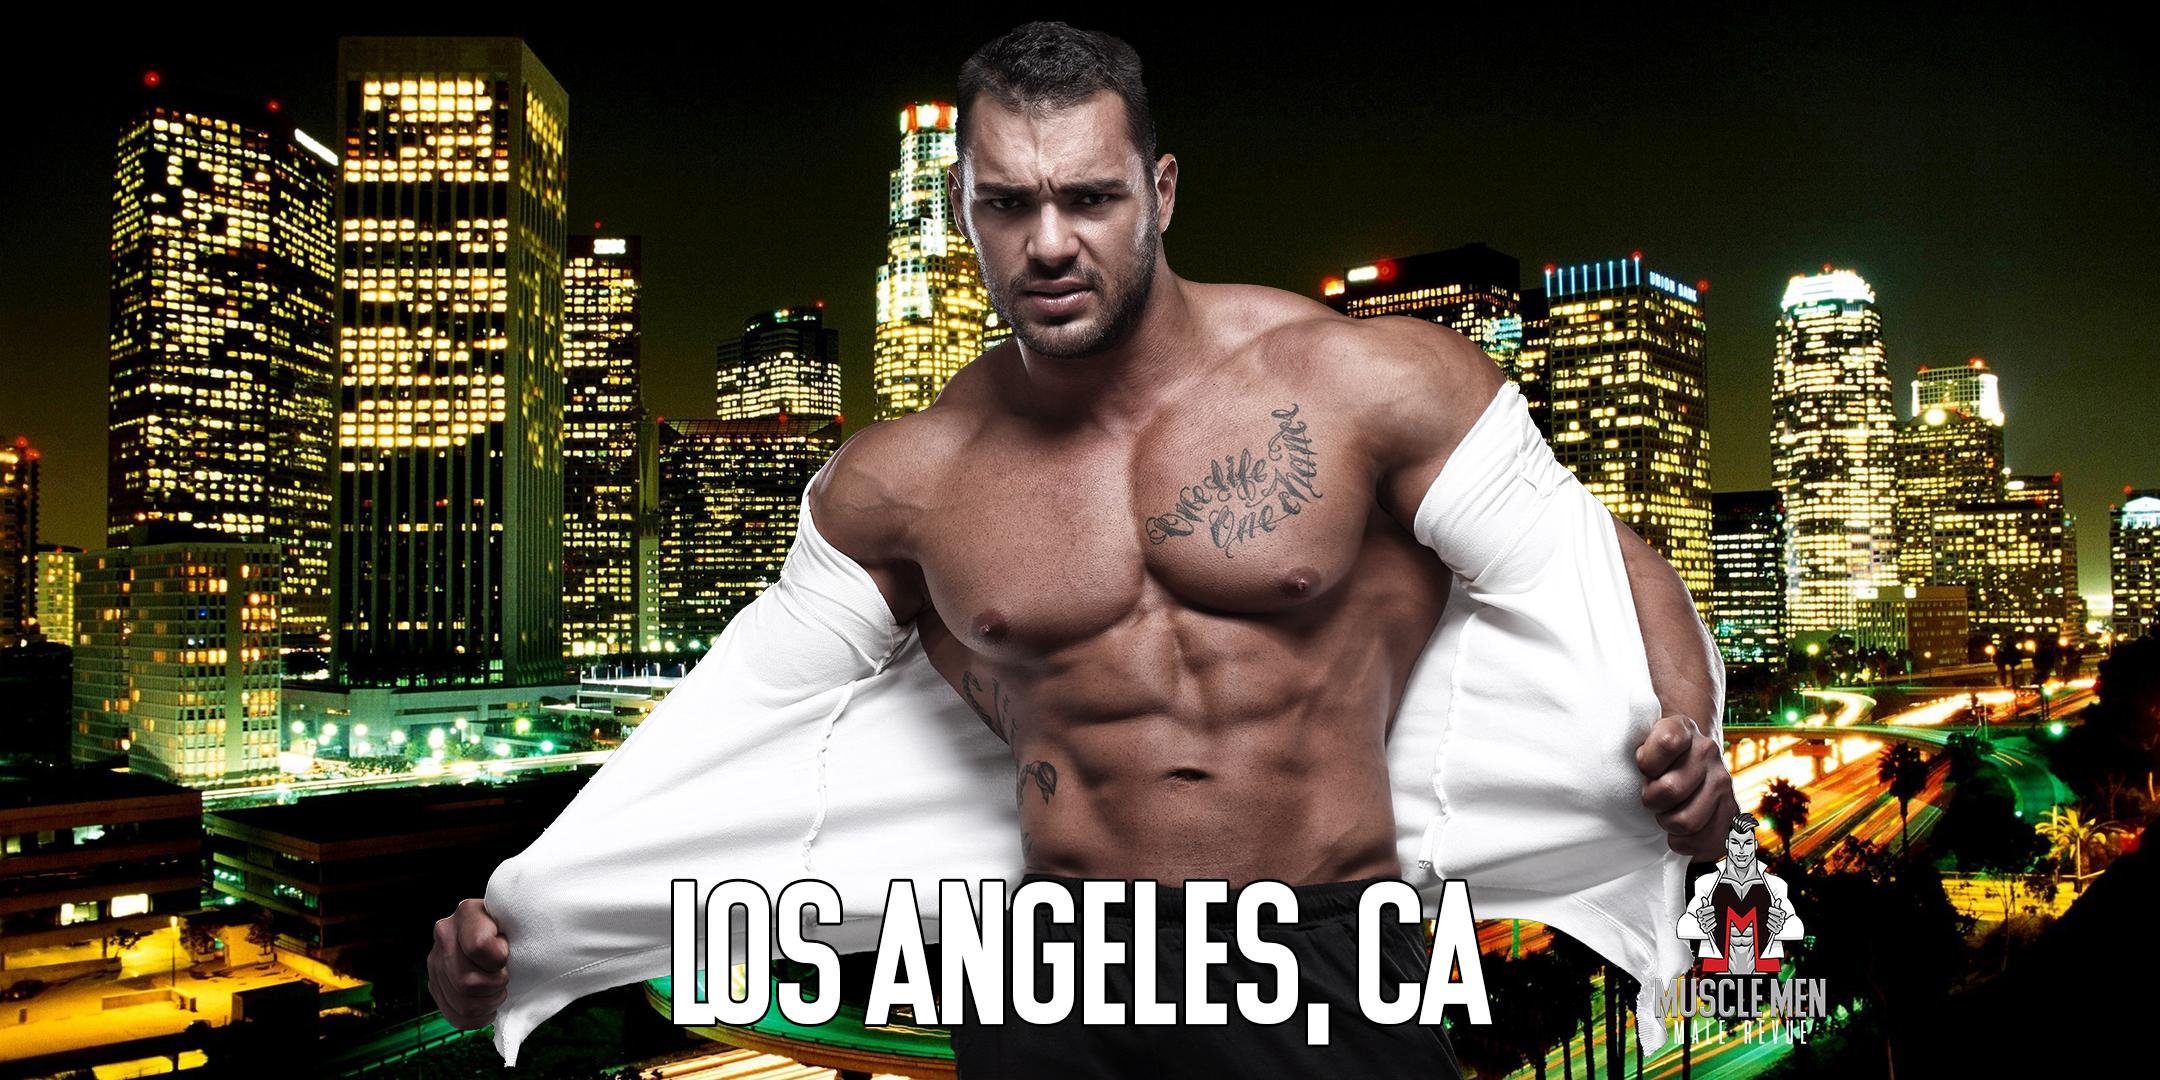 Muscle Men Male Strippers Revue & Male Strip Club Shows Oakland, CA 8PM-10PM